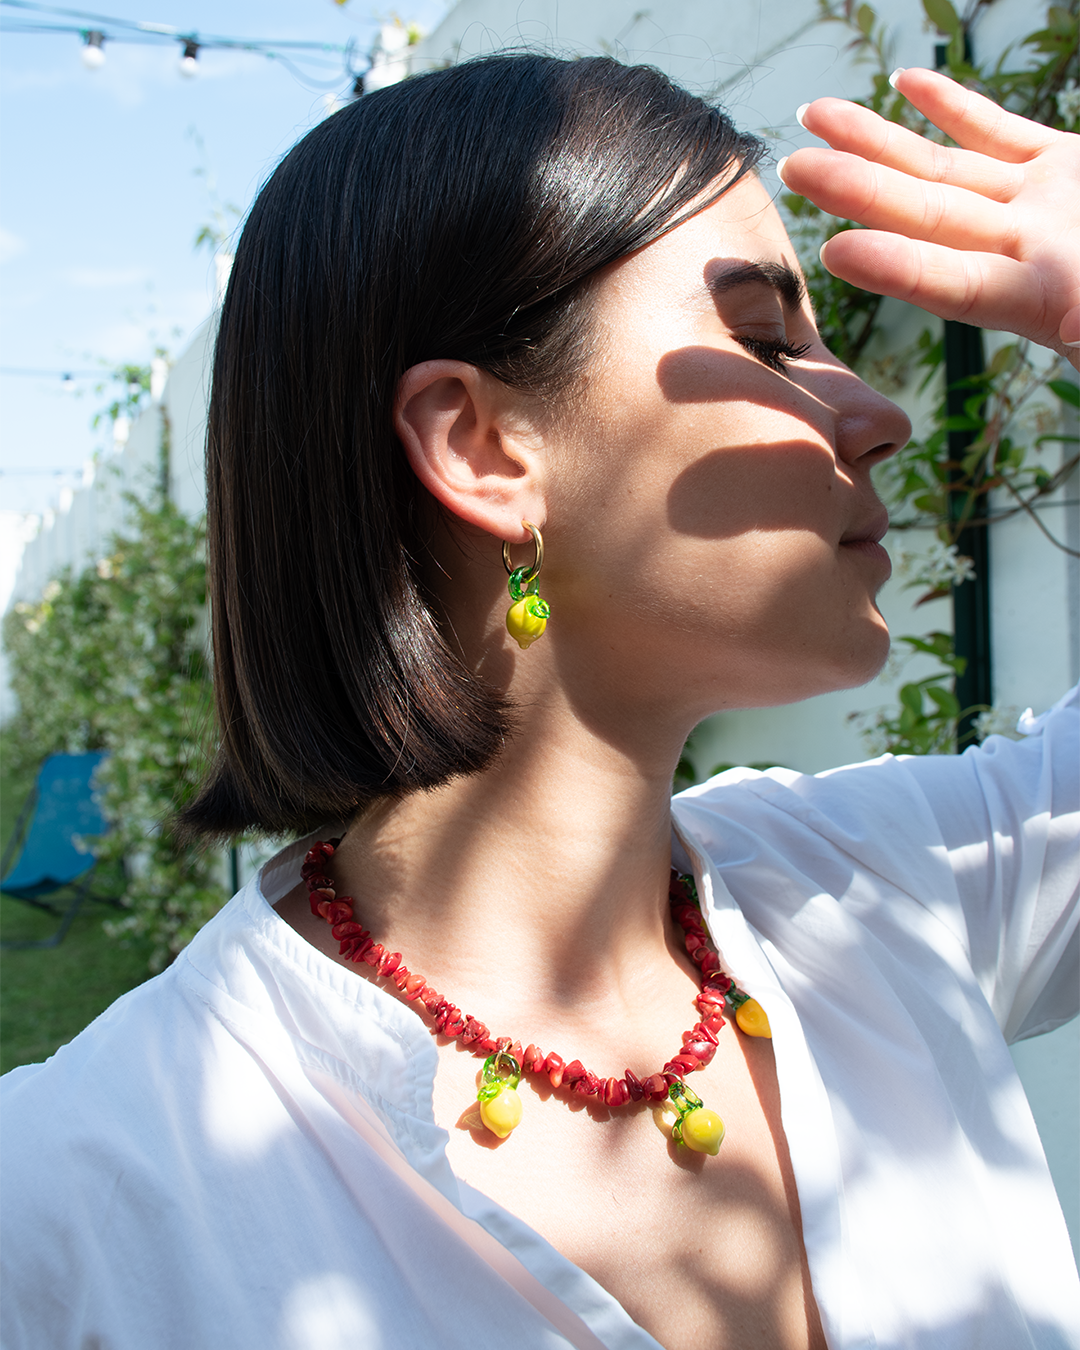 Handmade recycled glass earrings - lemon earrings -Suplais